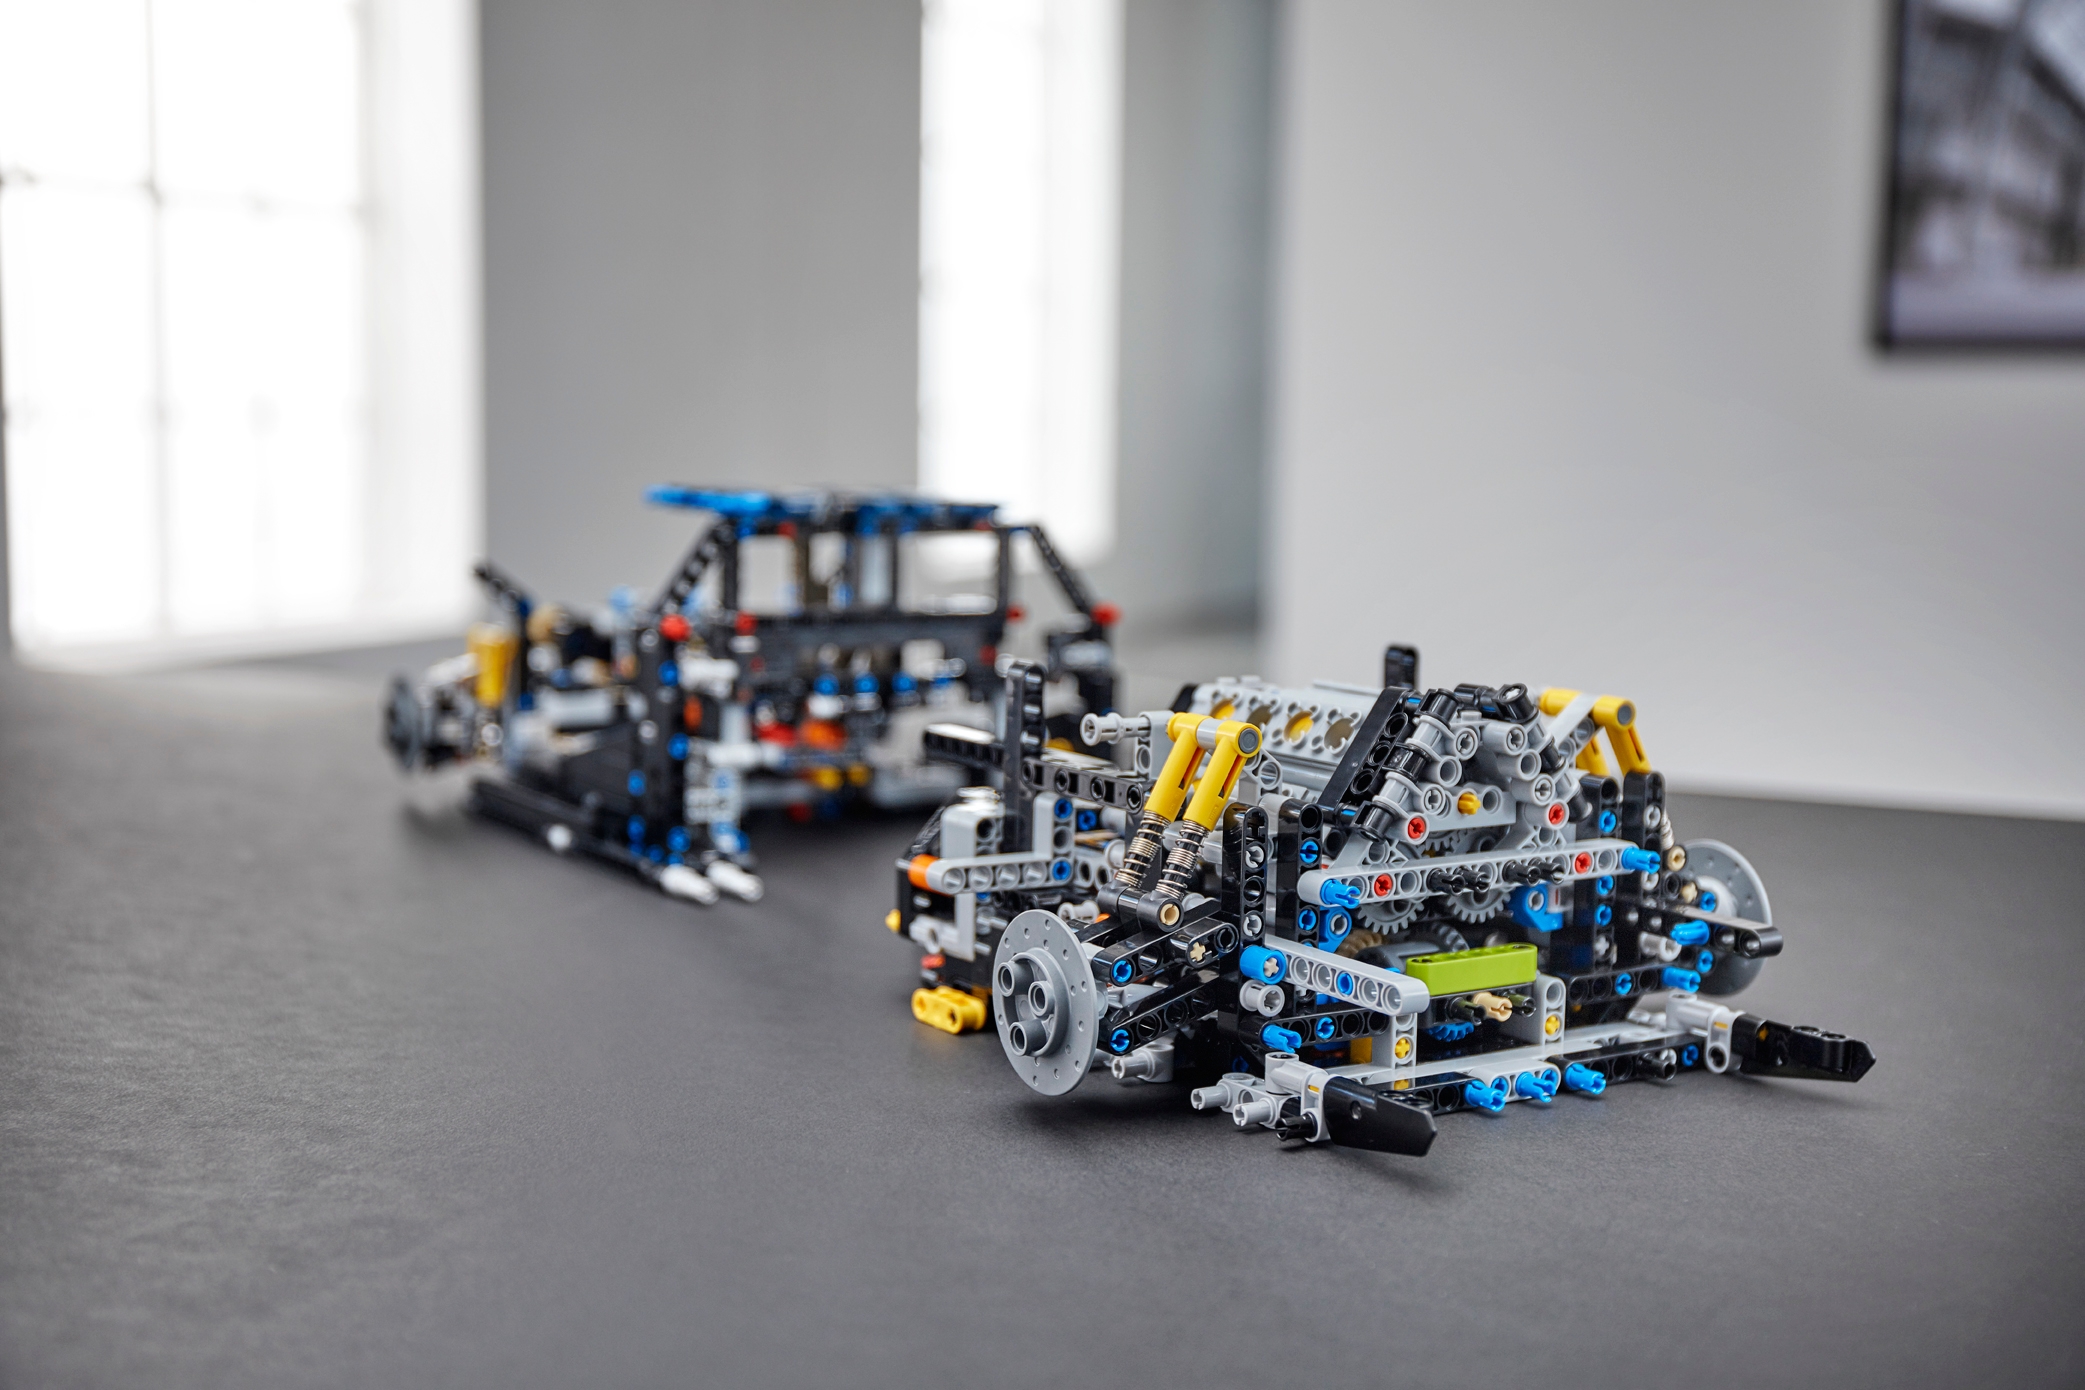 Achetez LEGO Technic 42083 Bugatti Chiron en grande remise sur Zavvi